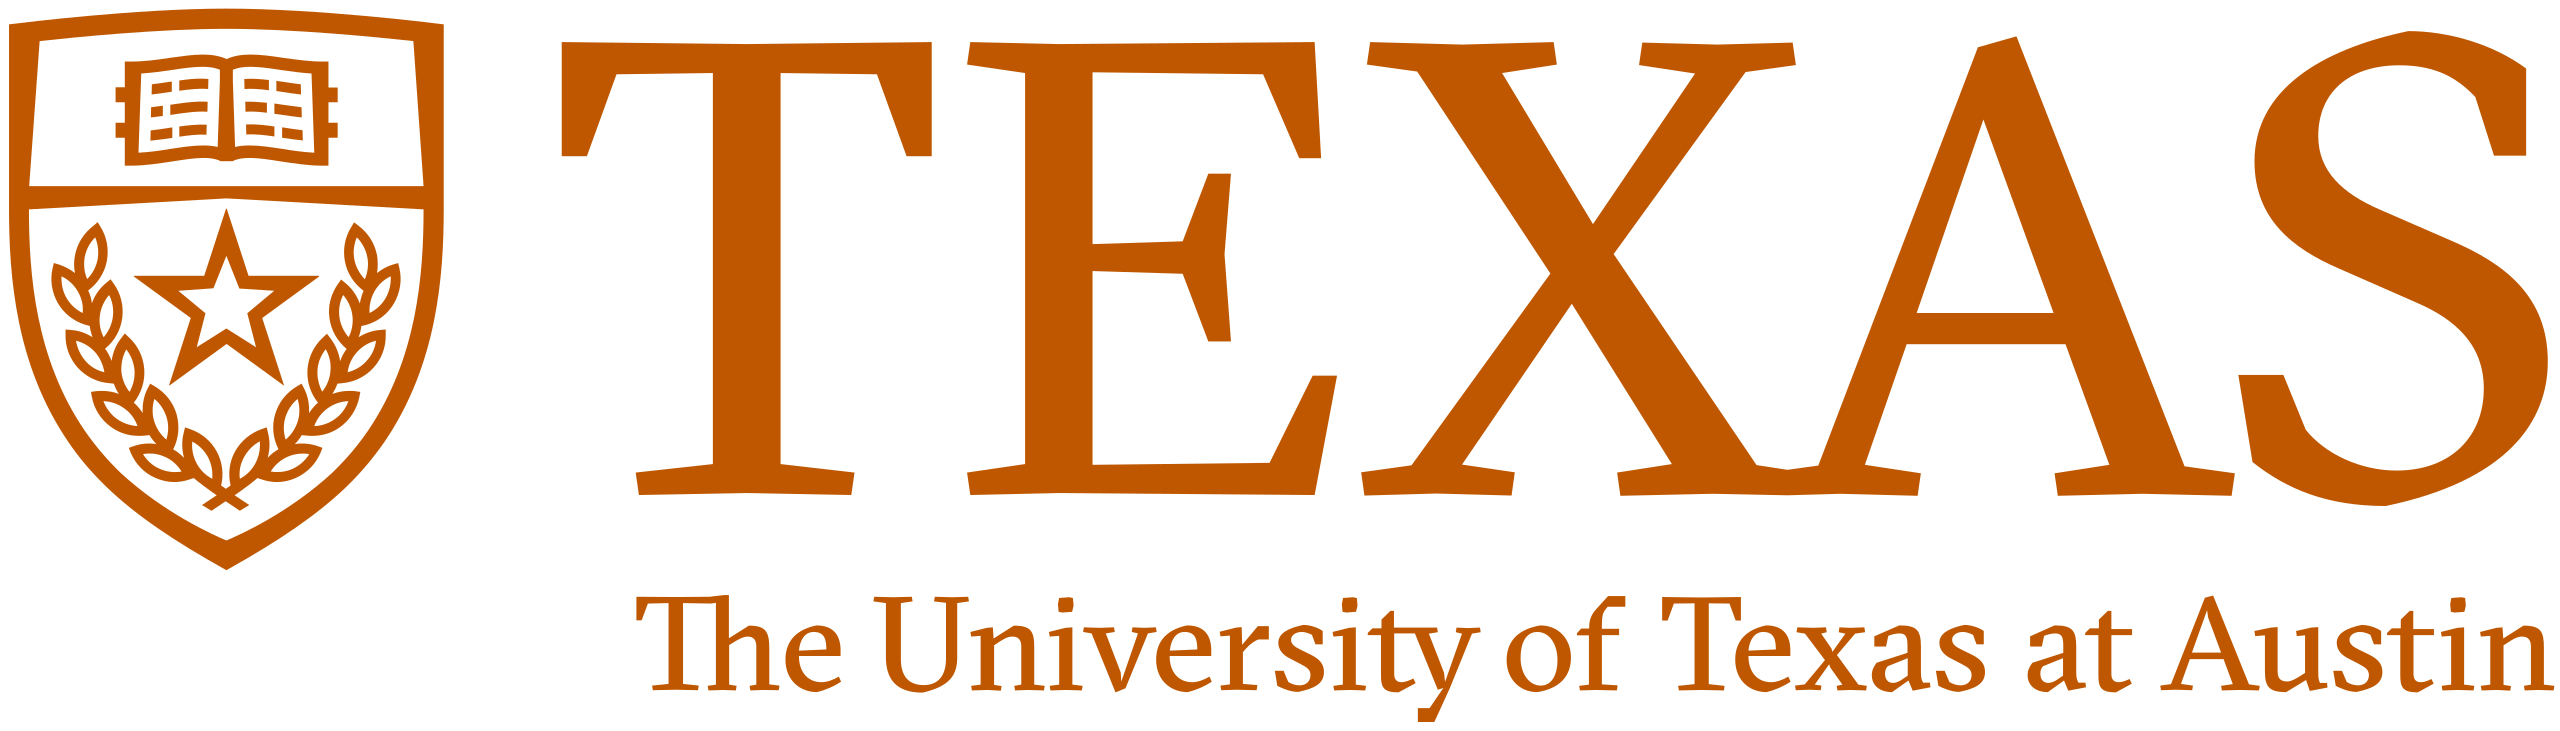 University of Texas at Austin interview prep